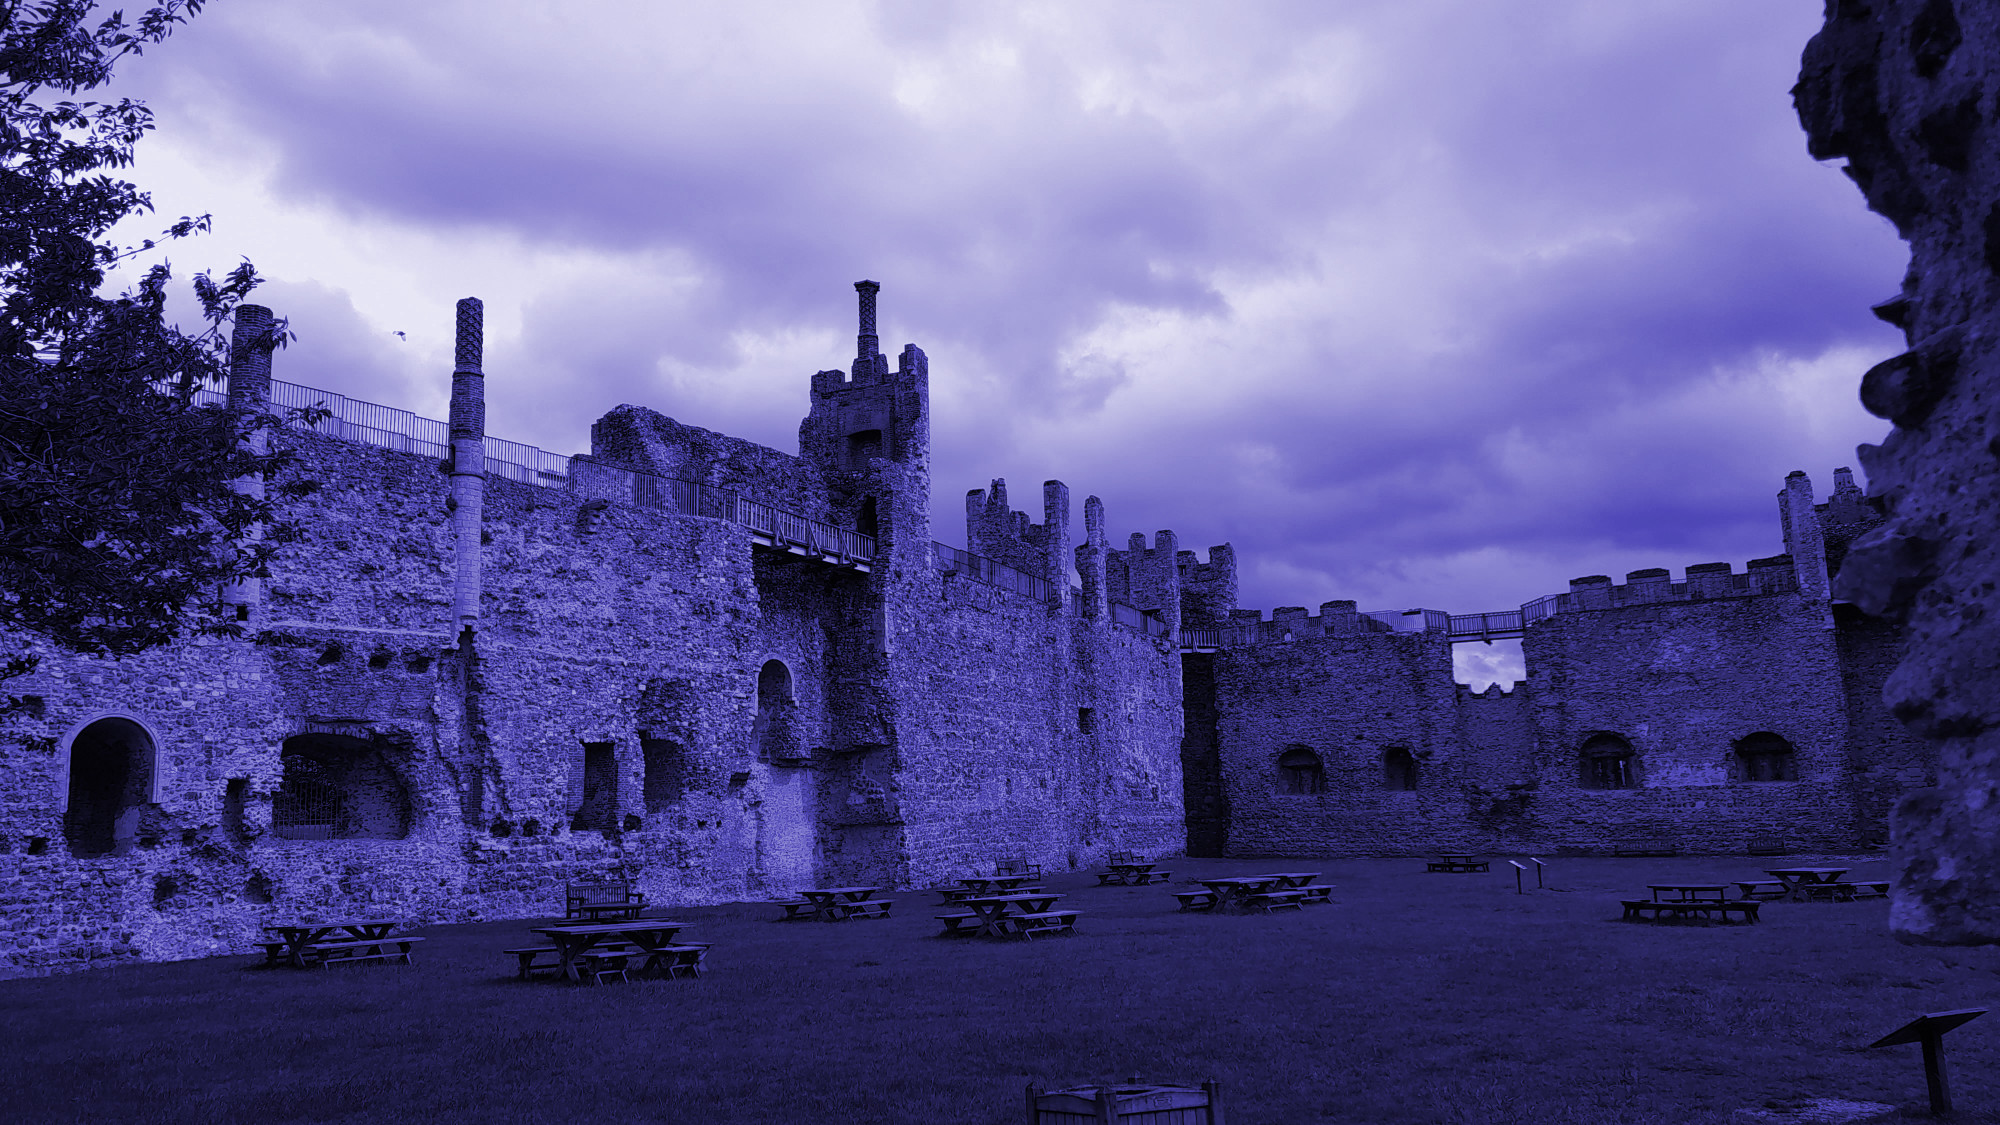 Episode 64 – Framlingham Castle